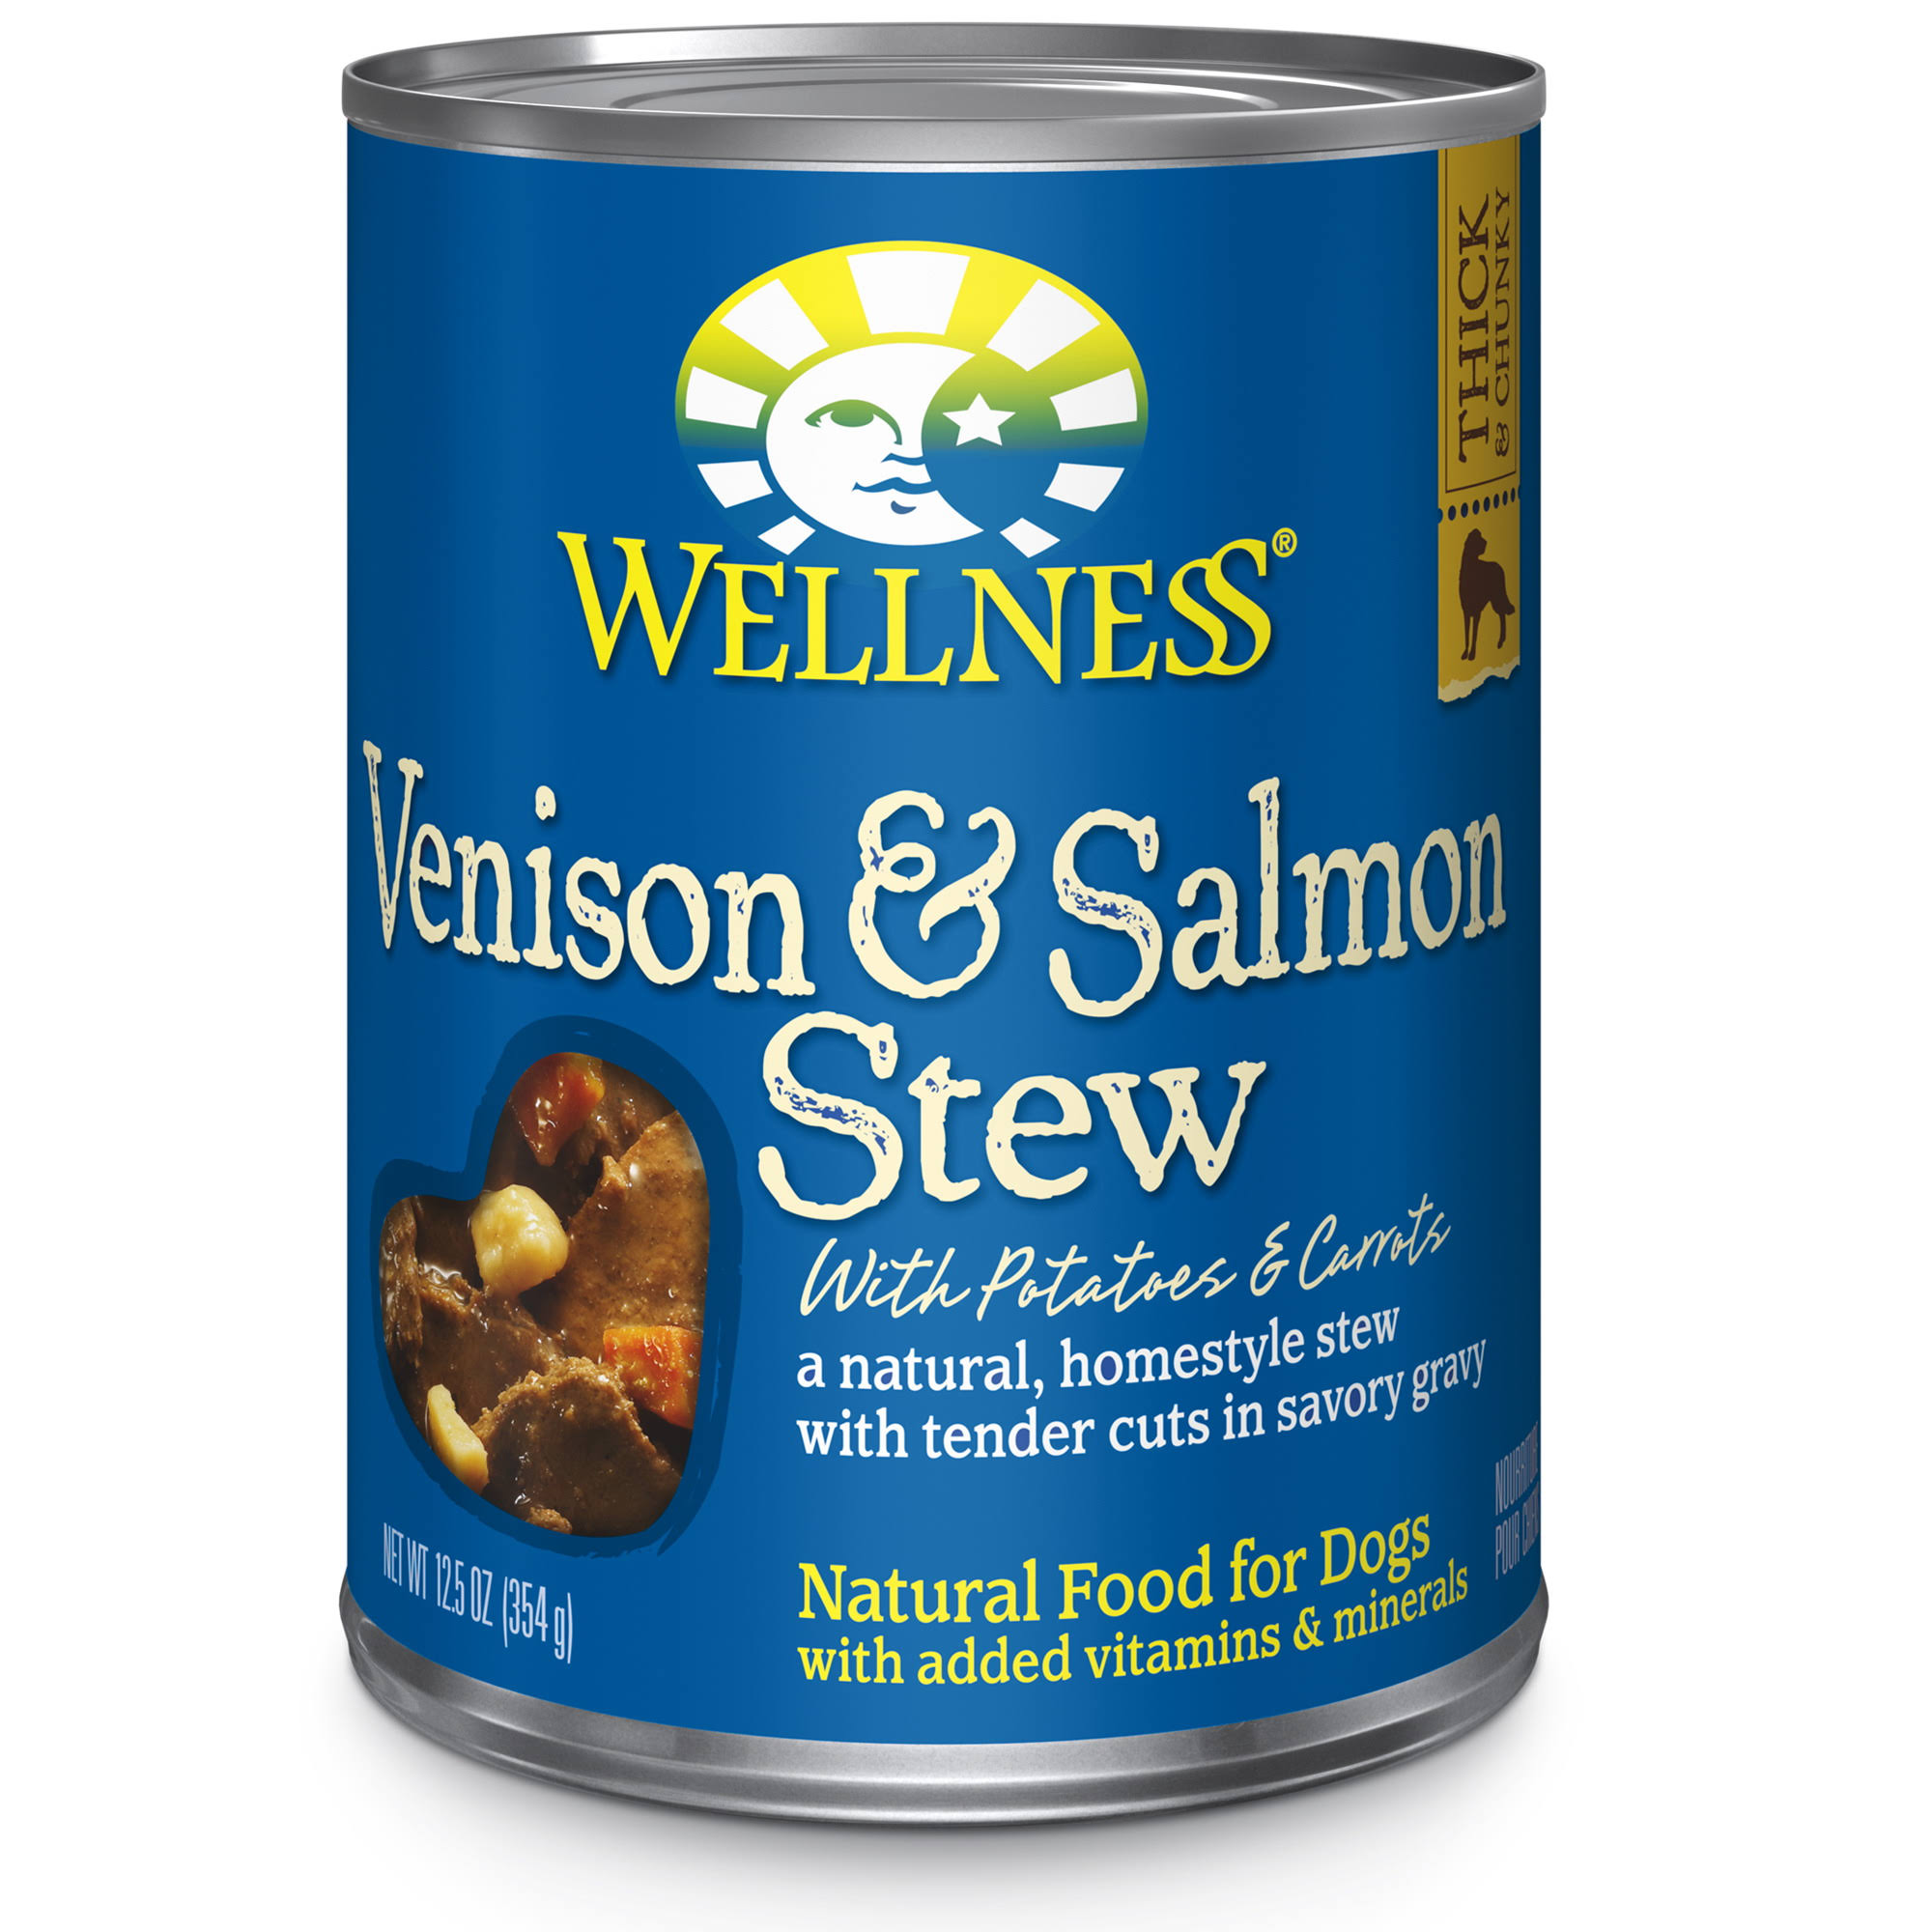 Wellness Canned Dog Food - Venison & Salmon Stew, 354g